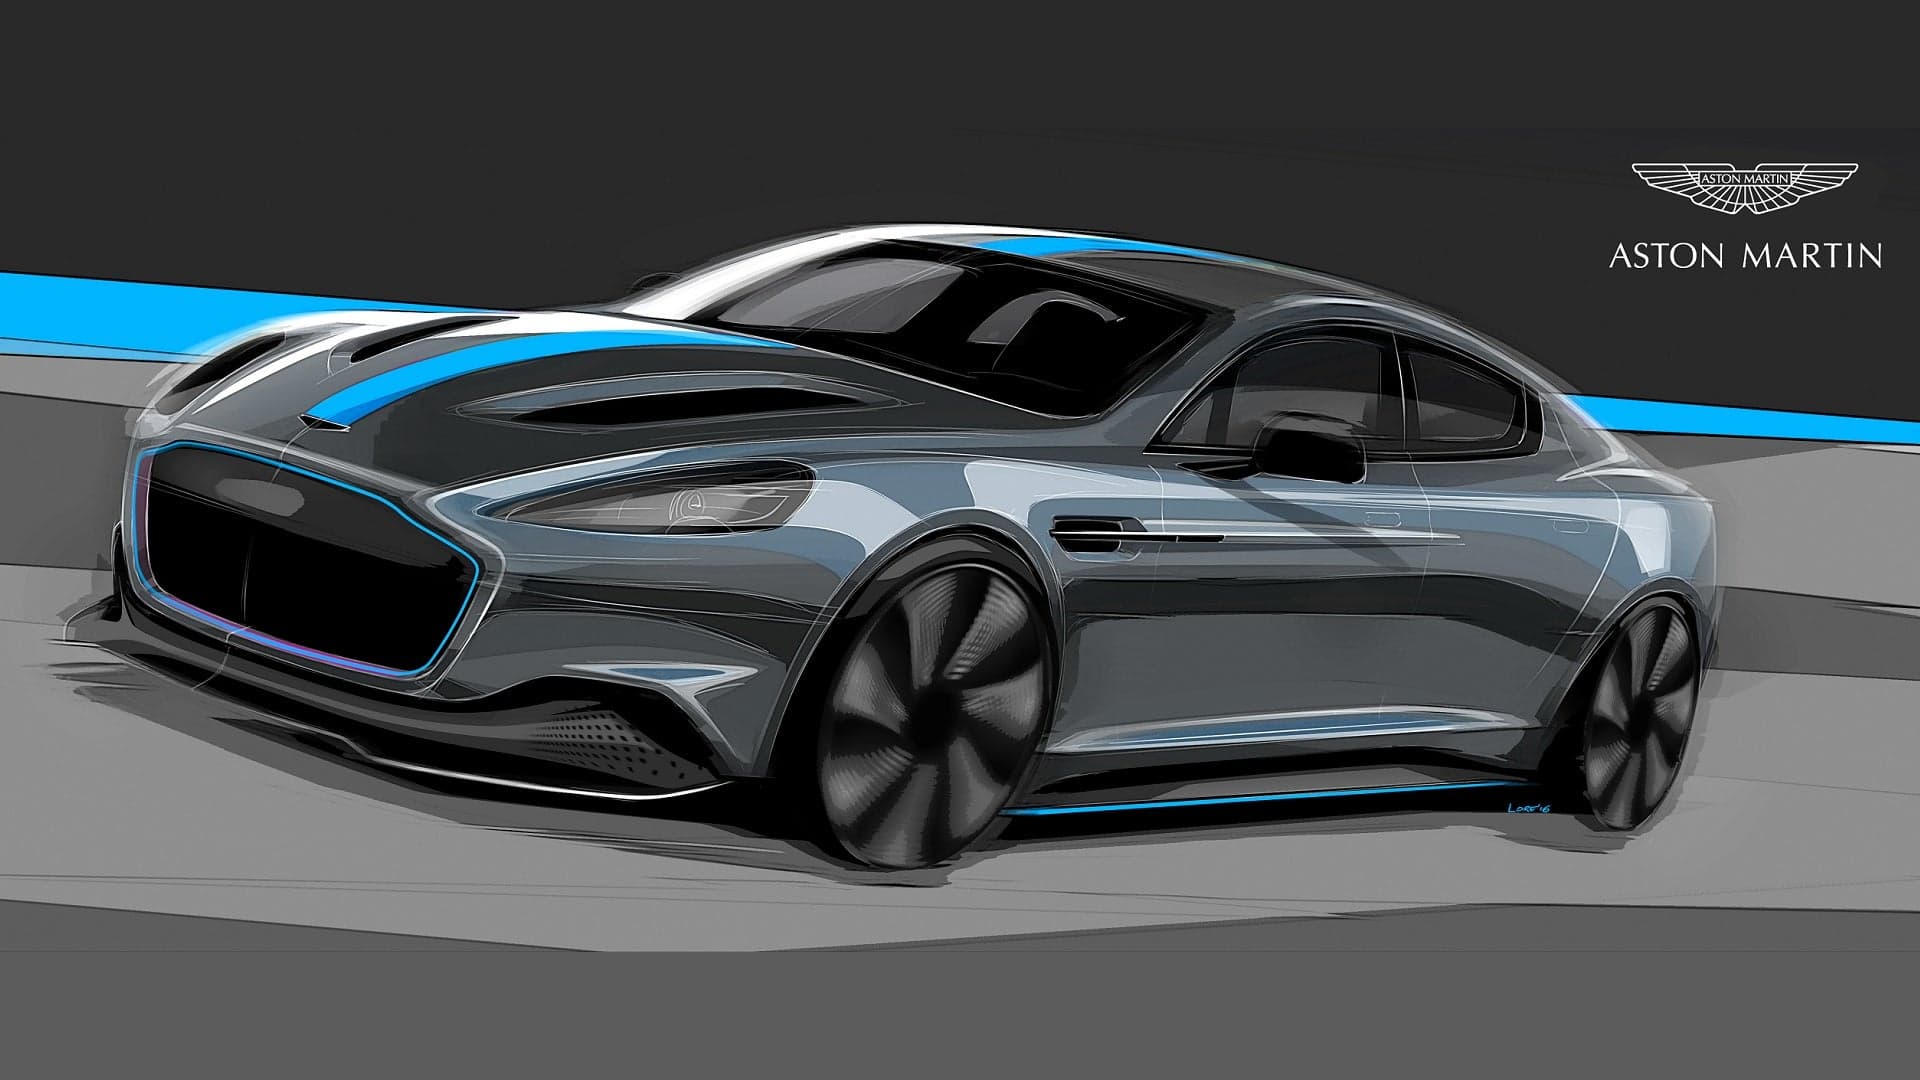 Aston Martin Wants to Take Tesla’s High-End Customers